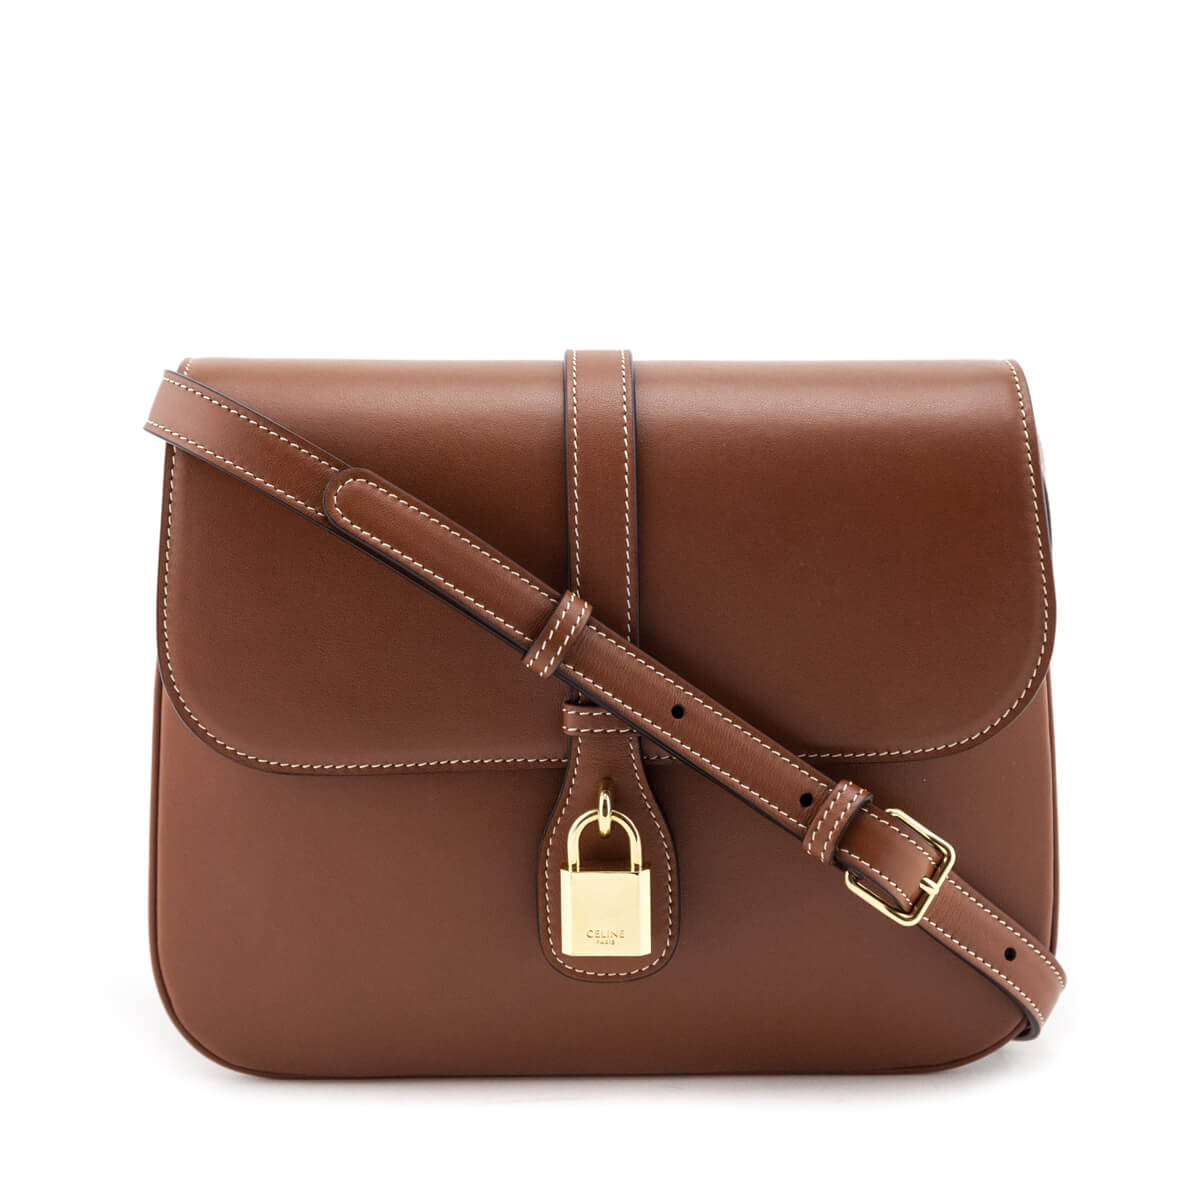 Celine Tan Smooth Calfskin Medium Tabou Bag - Love that Bag etc - Preowned Authentic Designer Handbags & Preloved Fashions